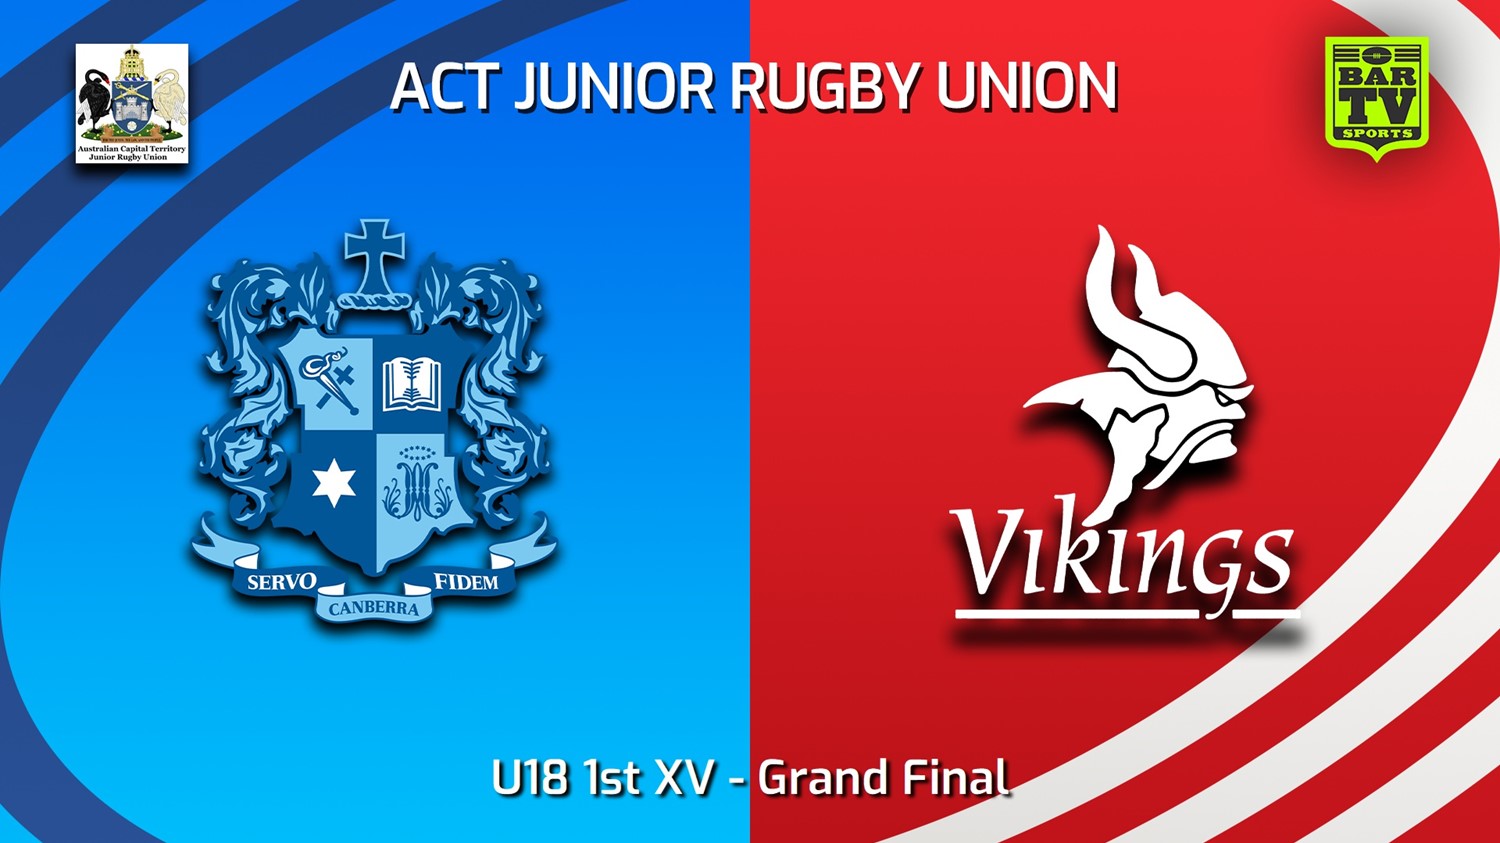 230903-ACT Junior Rugby Union Grand Final - U18 1st XV - Marist Rugby Club v Tuggeranong Vikings Minigame Slate Image